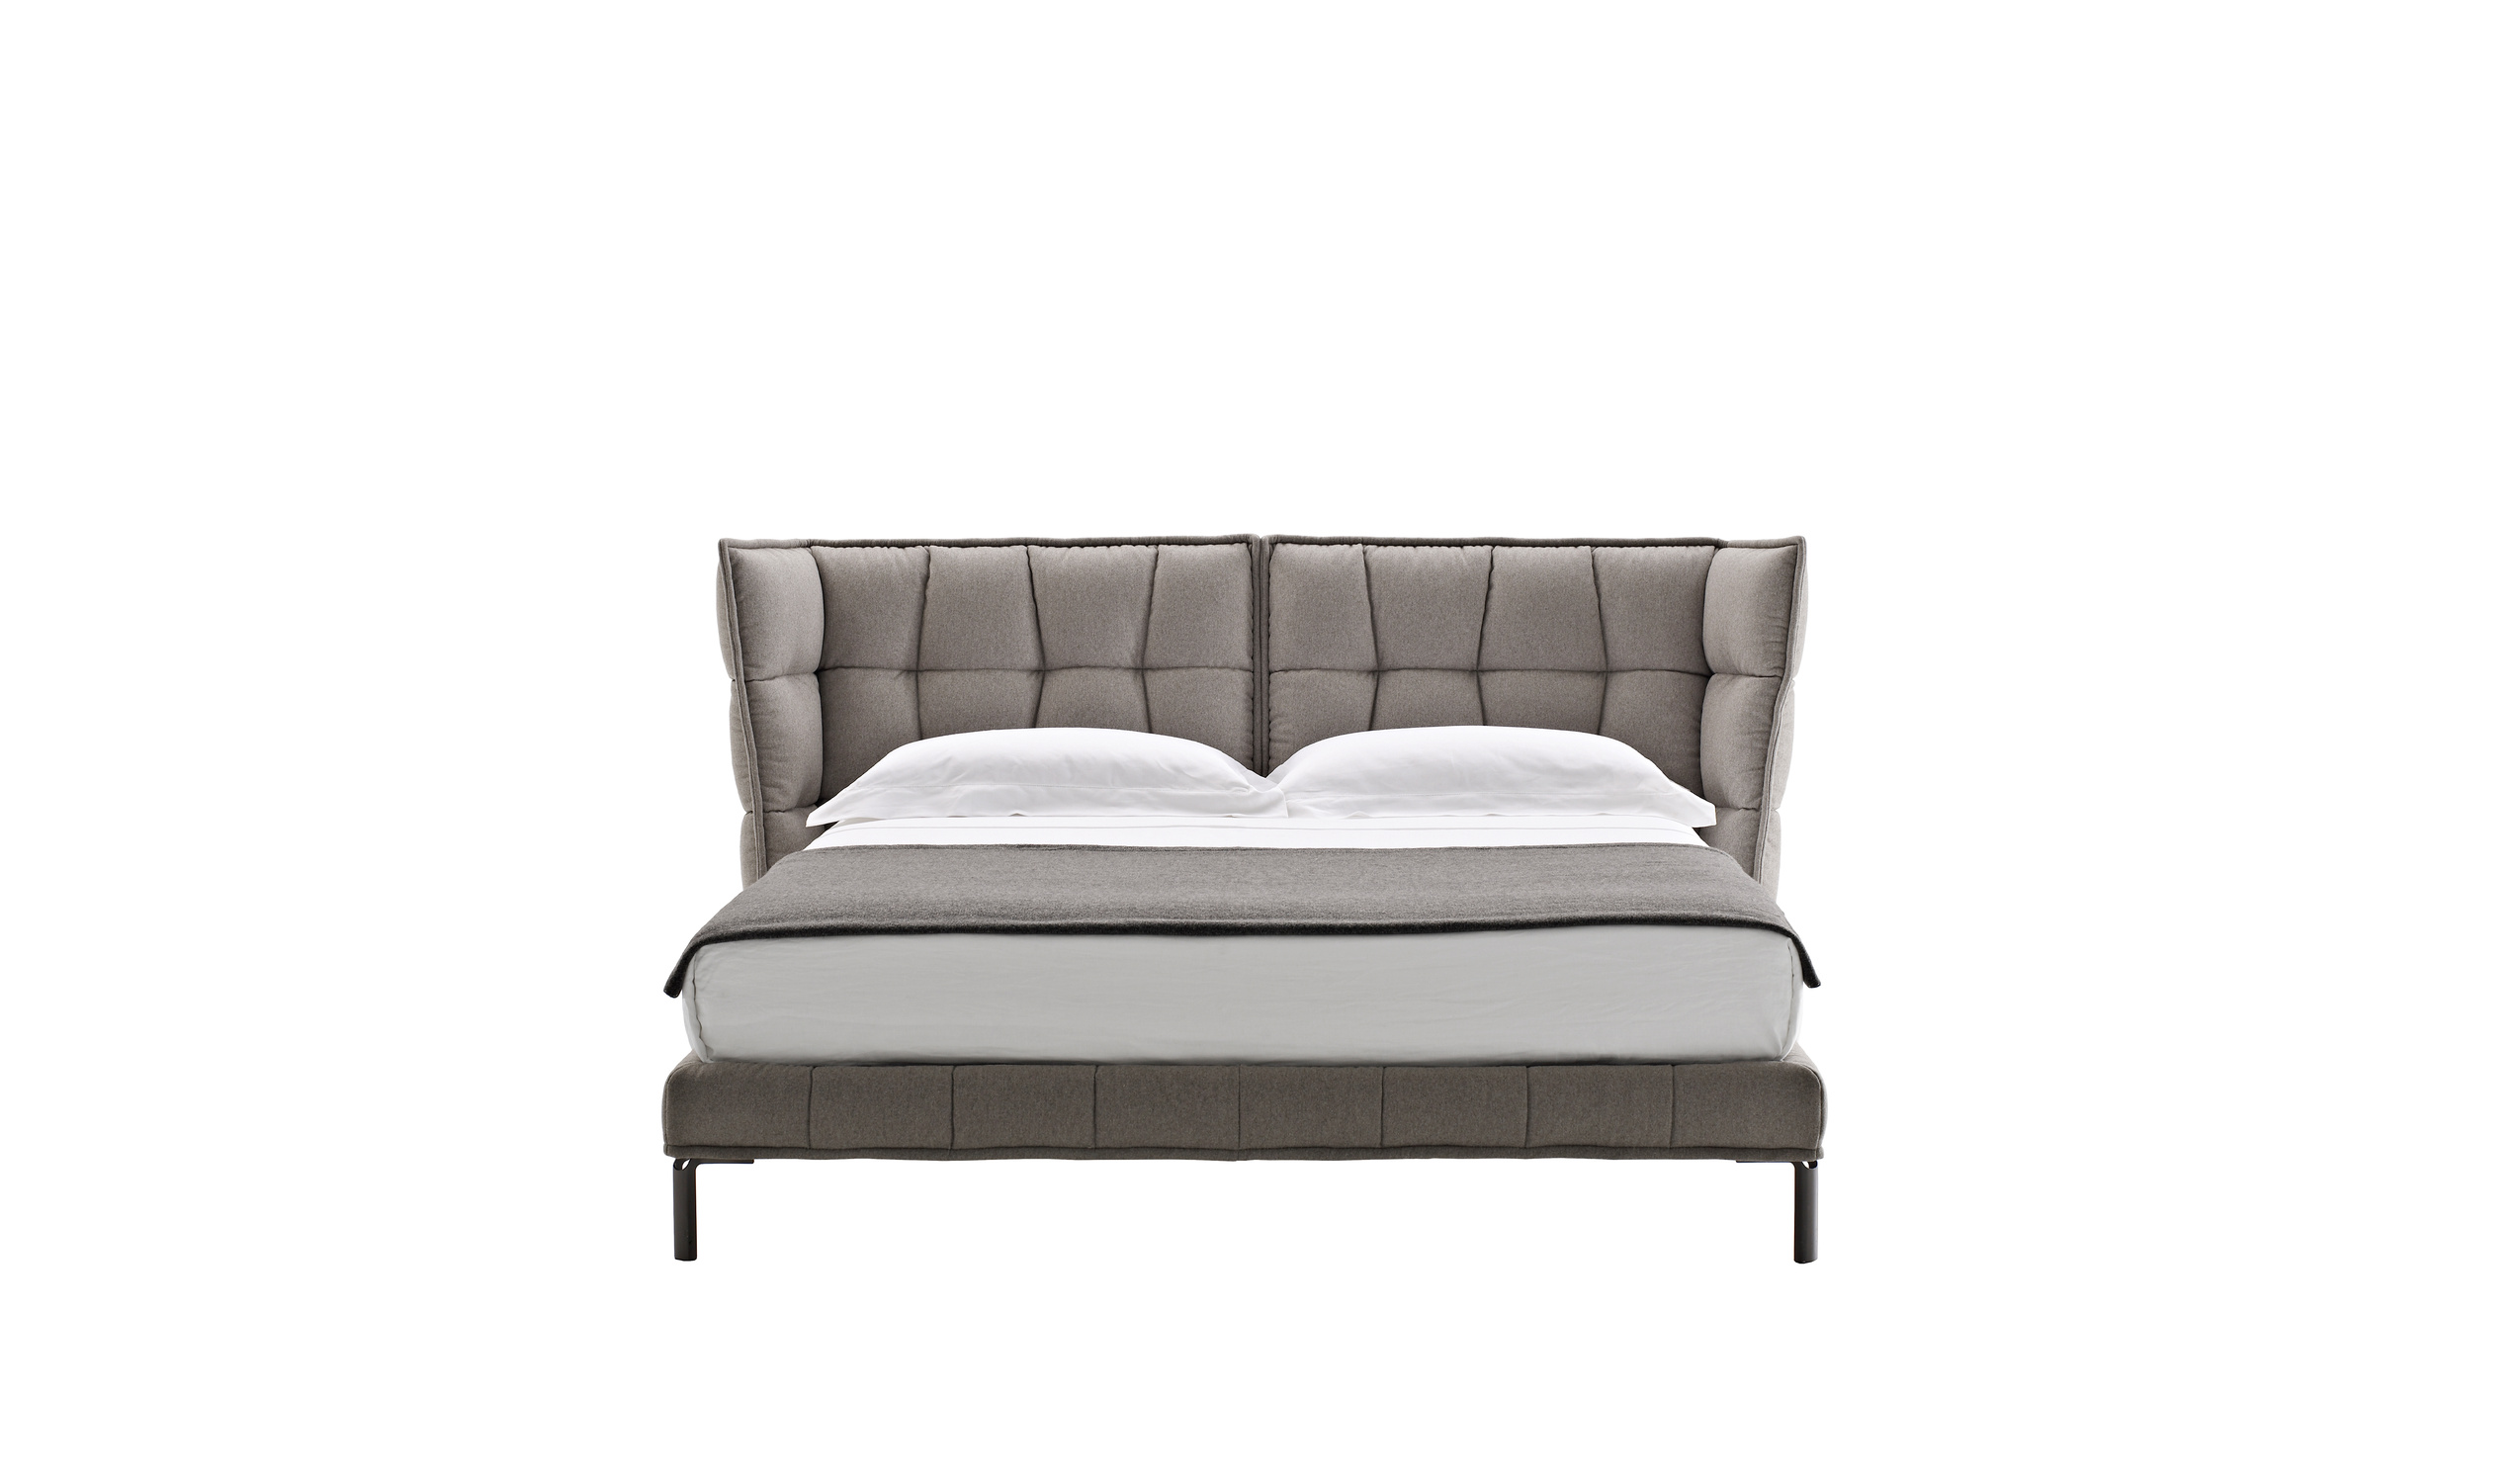 Designer Italian modern beds - Husk Beds